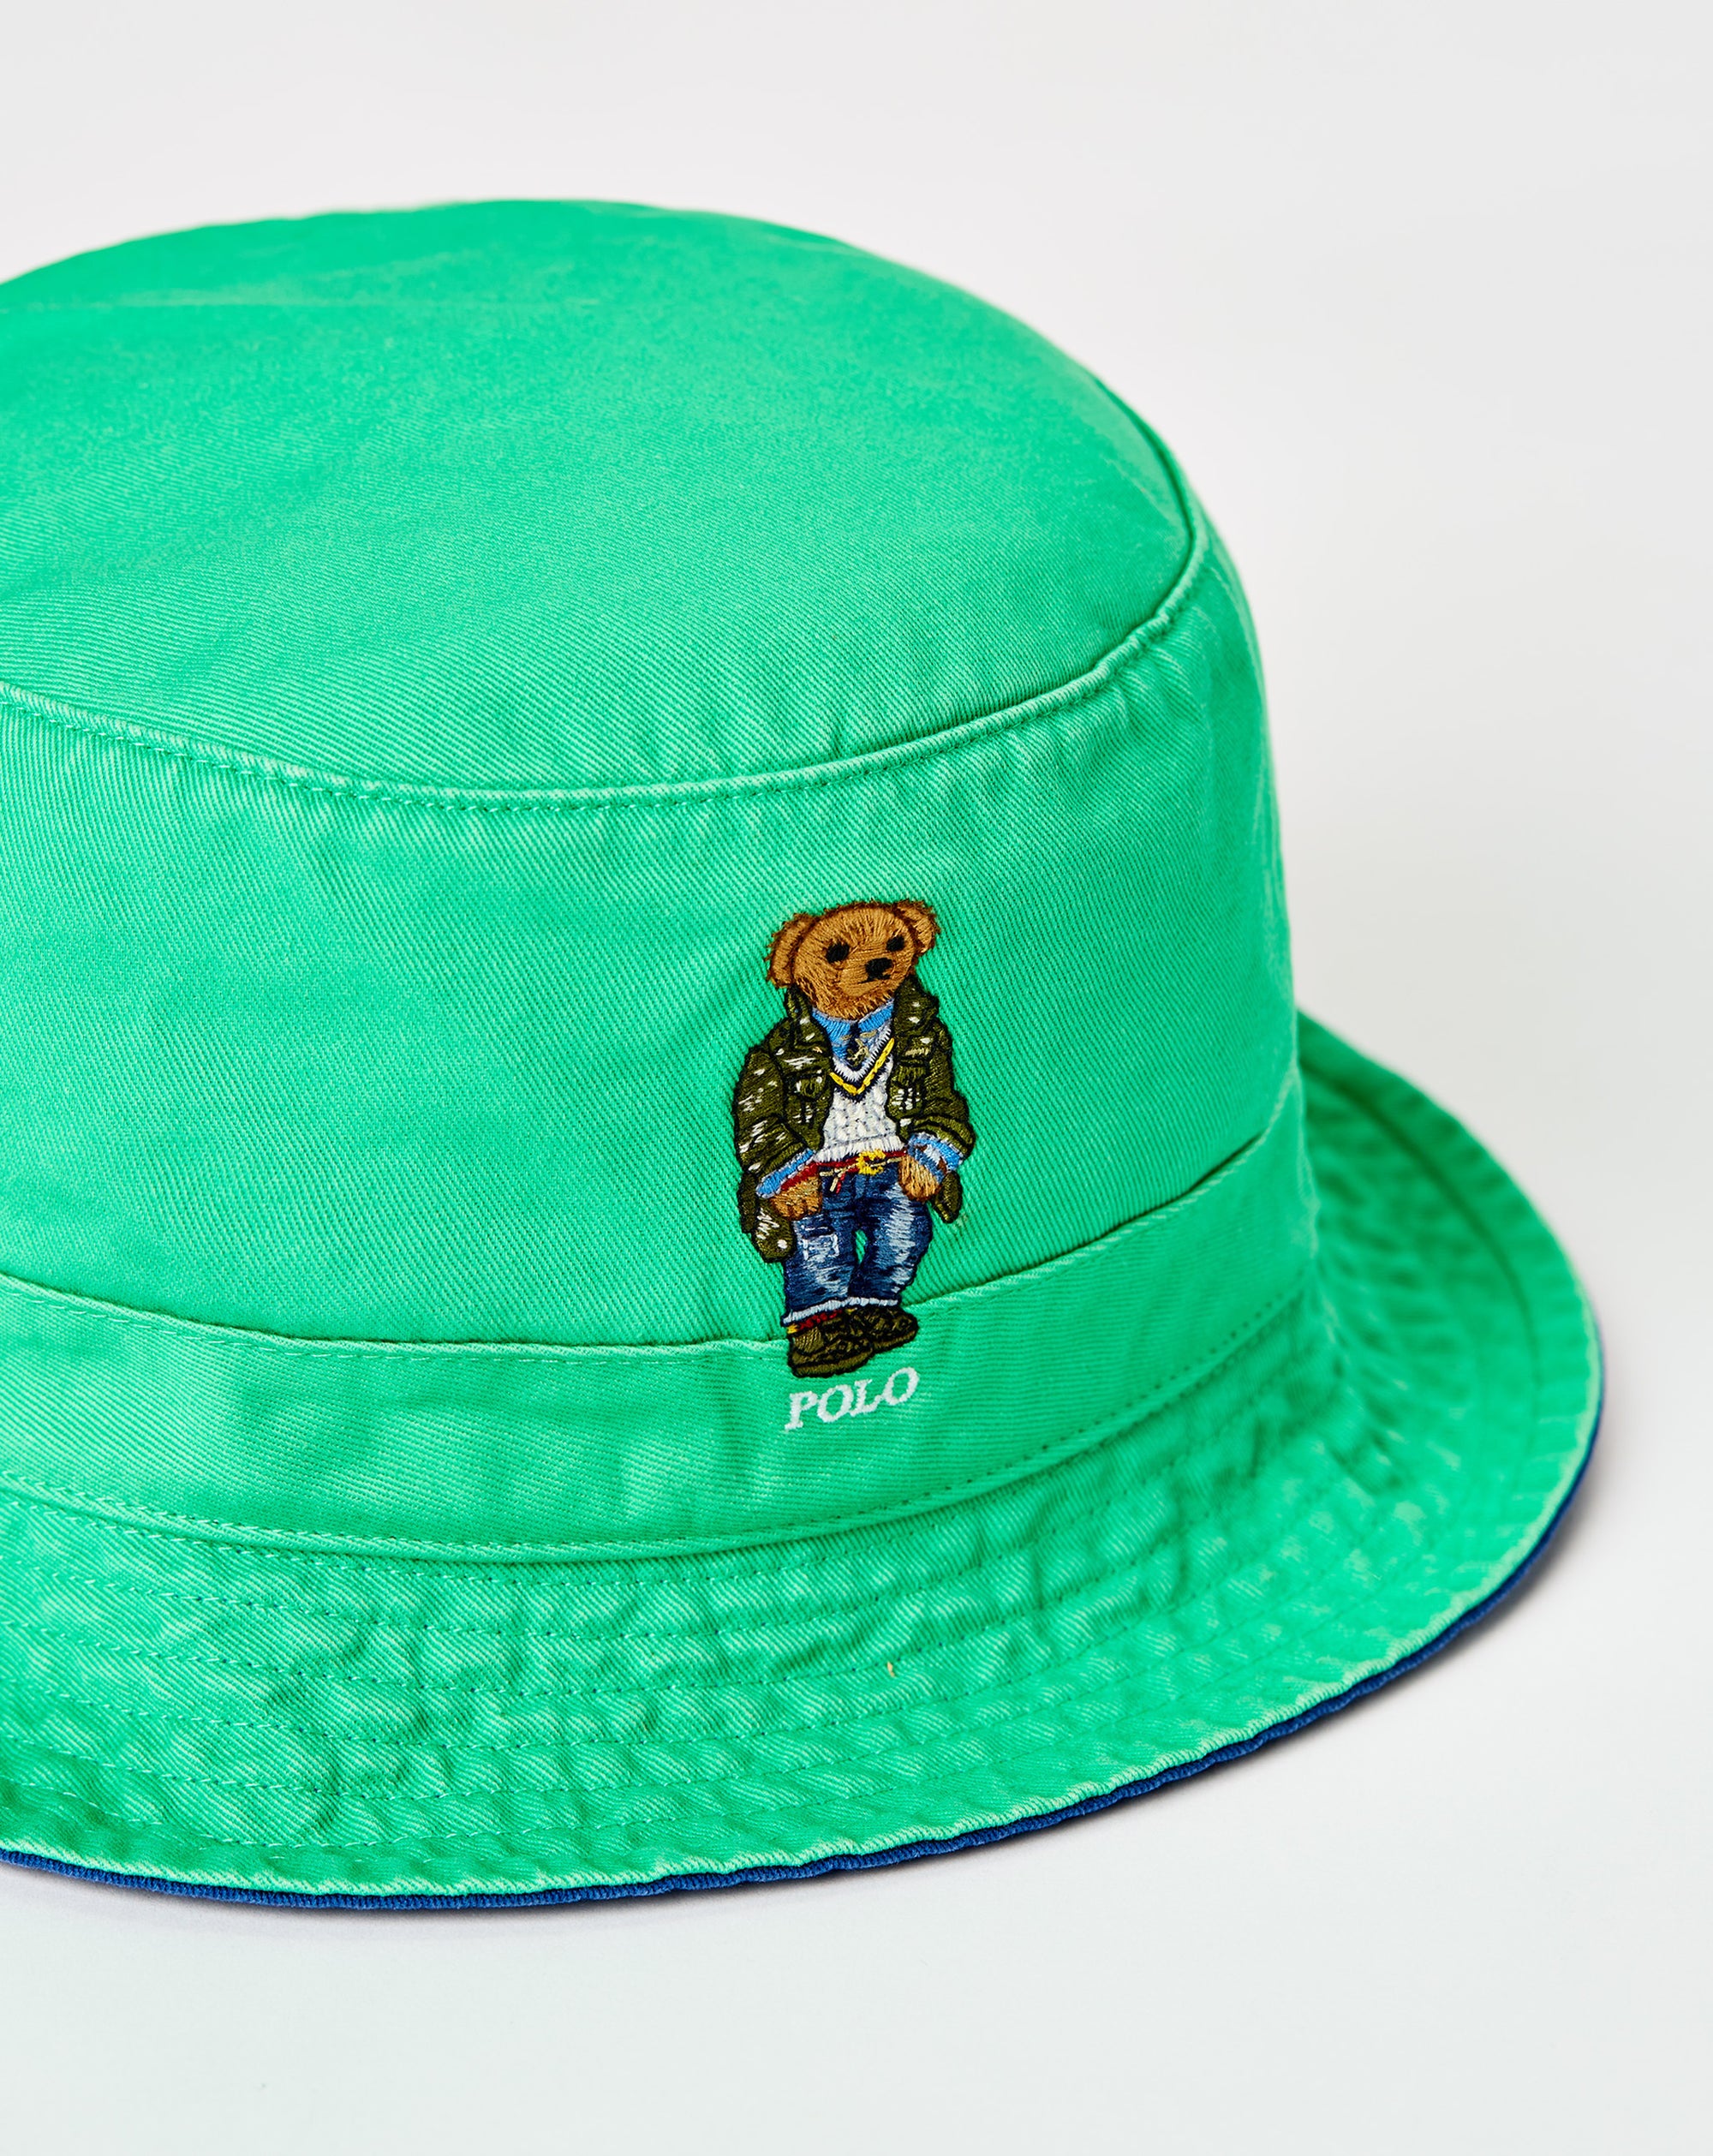 Polo Ralph Lauren Chino Loft Bucket Hat - Rule of Next Accessories